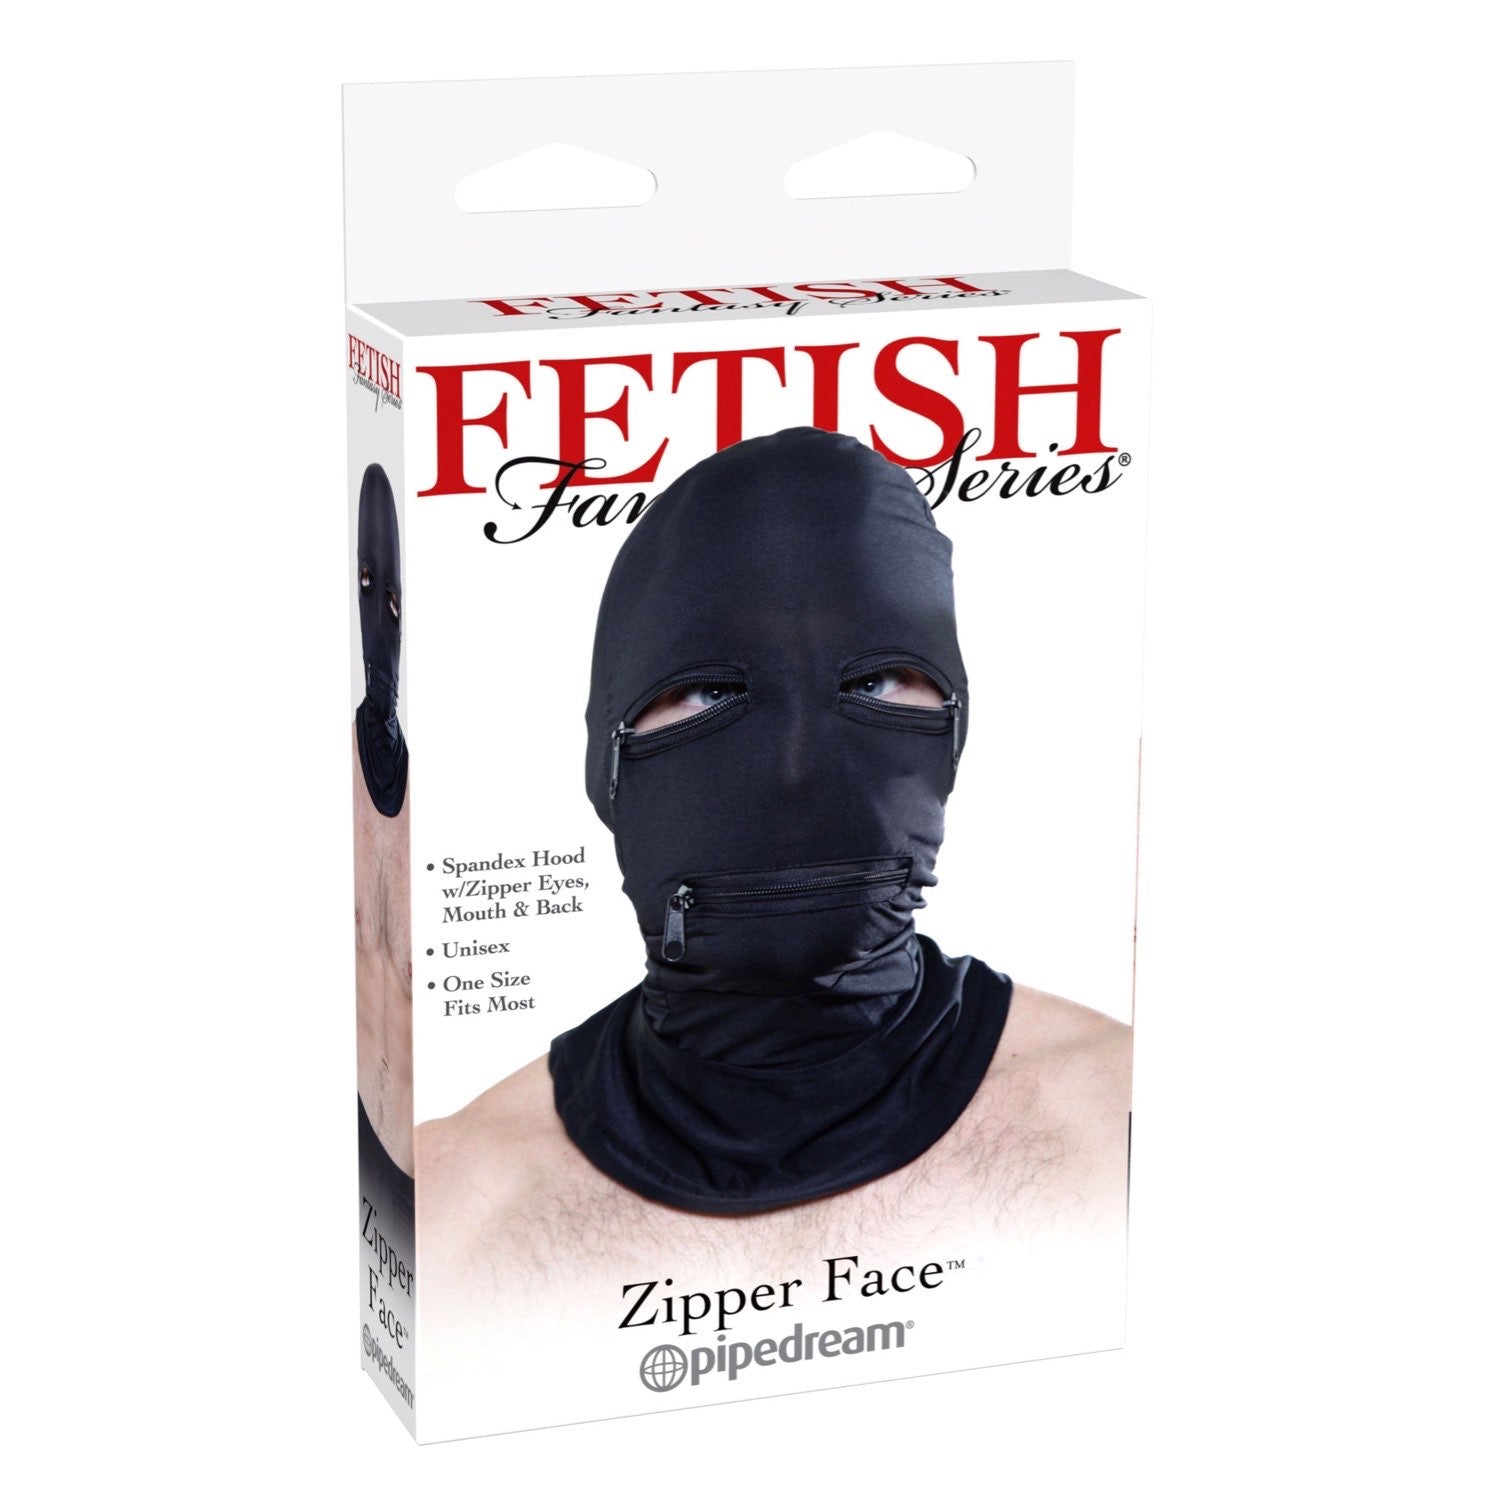 Fetish Fantasy Series Zipper Face Hood - Black Hood by Pipedream